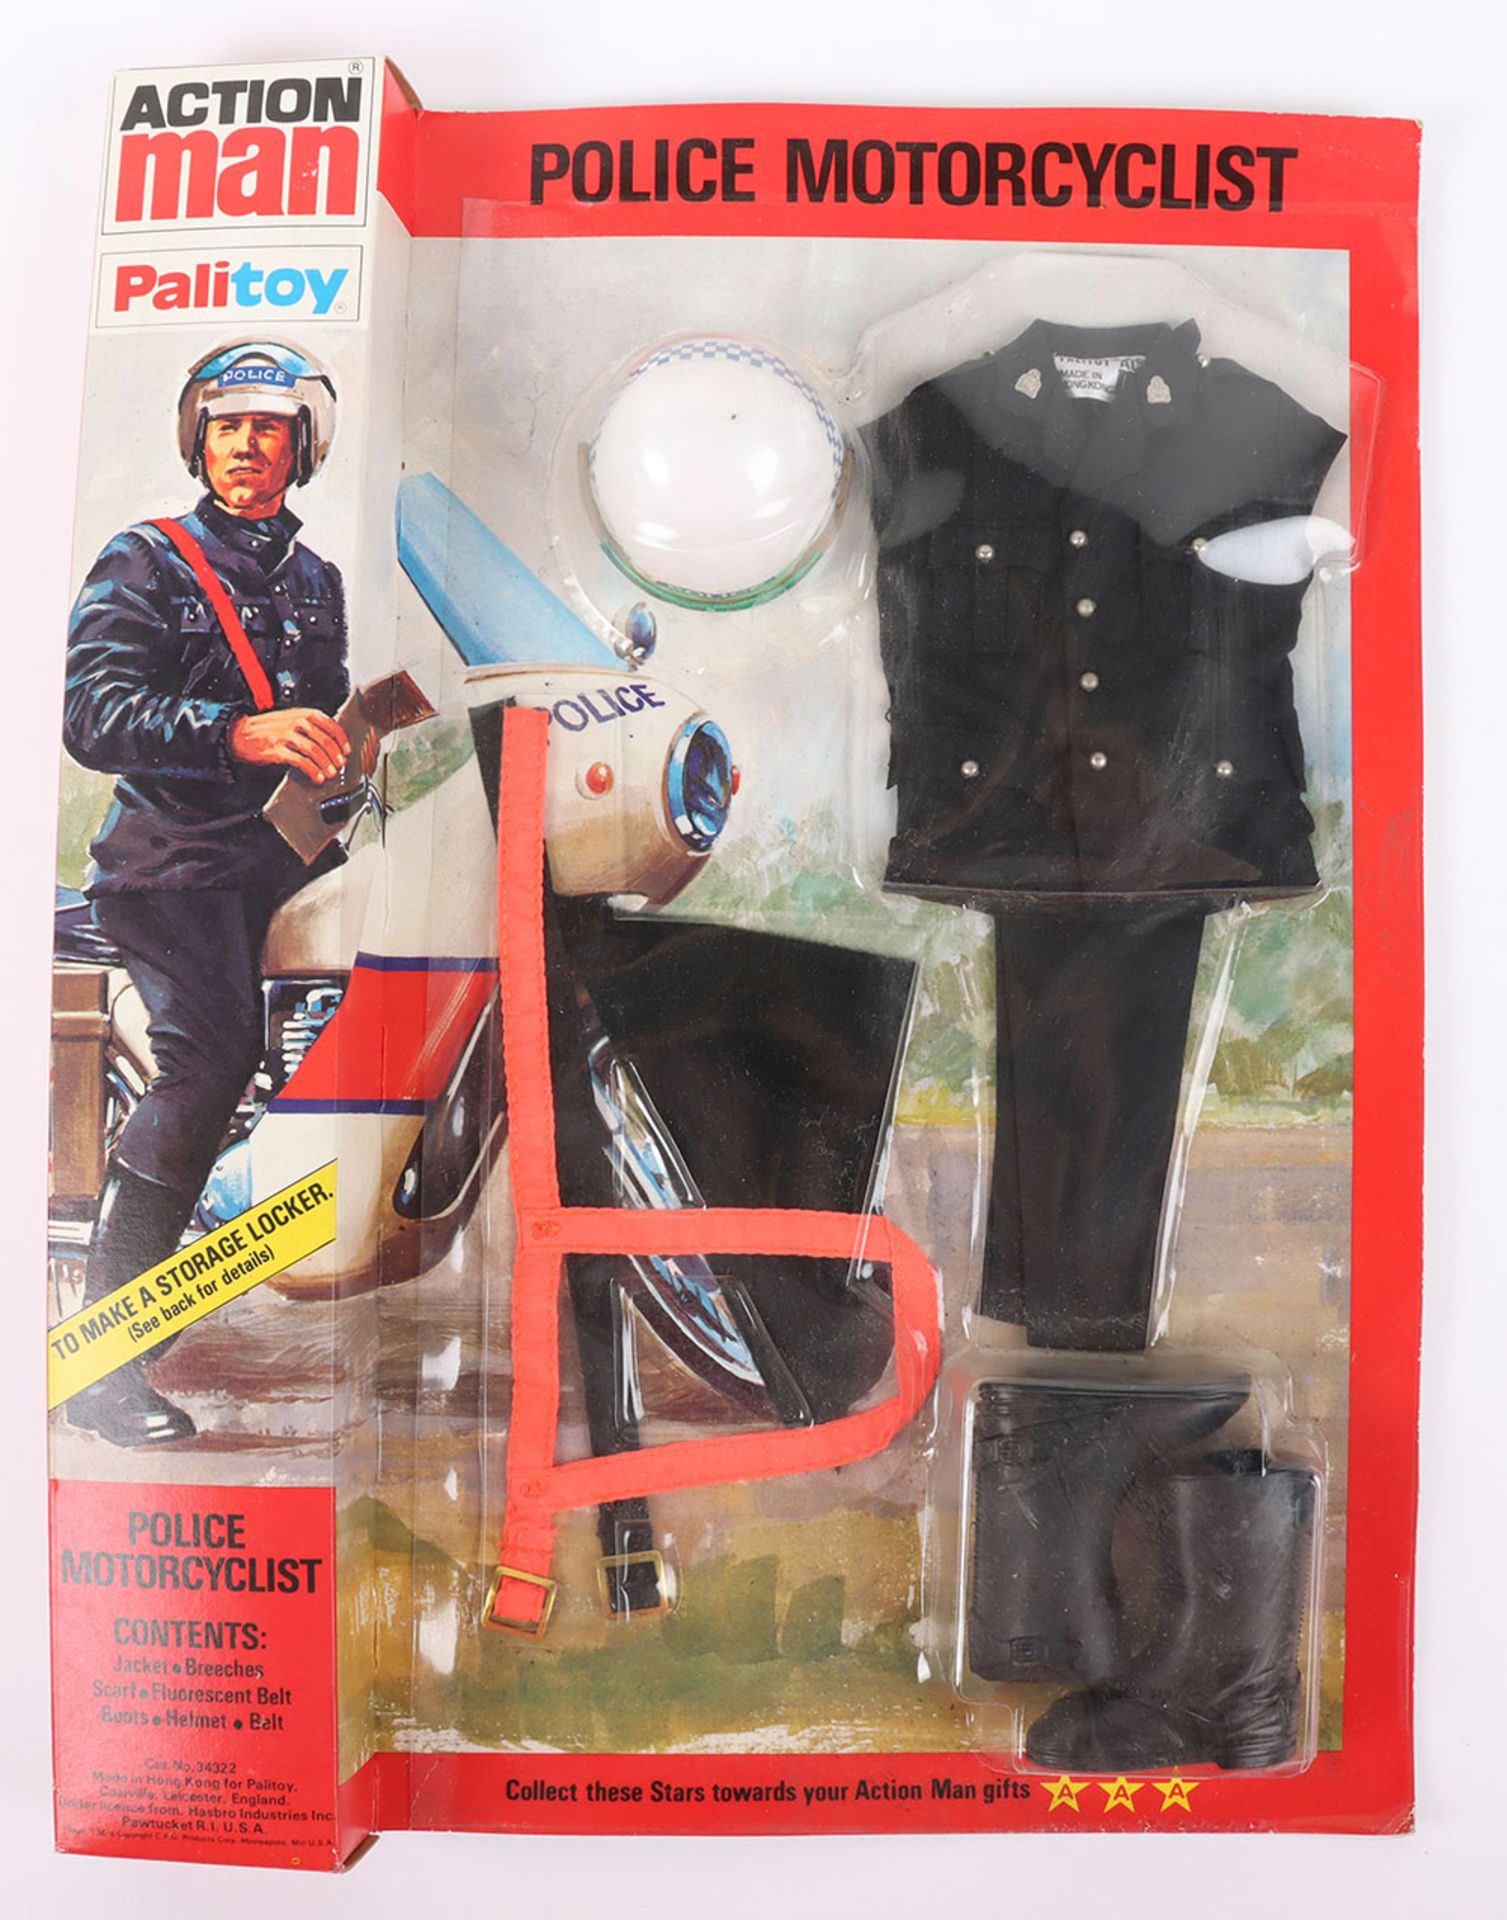 Palitoy Action Man Police Motorcyclist circa 1970’s